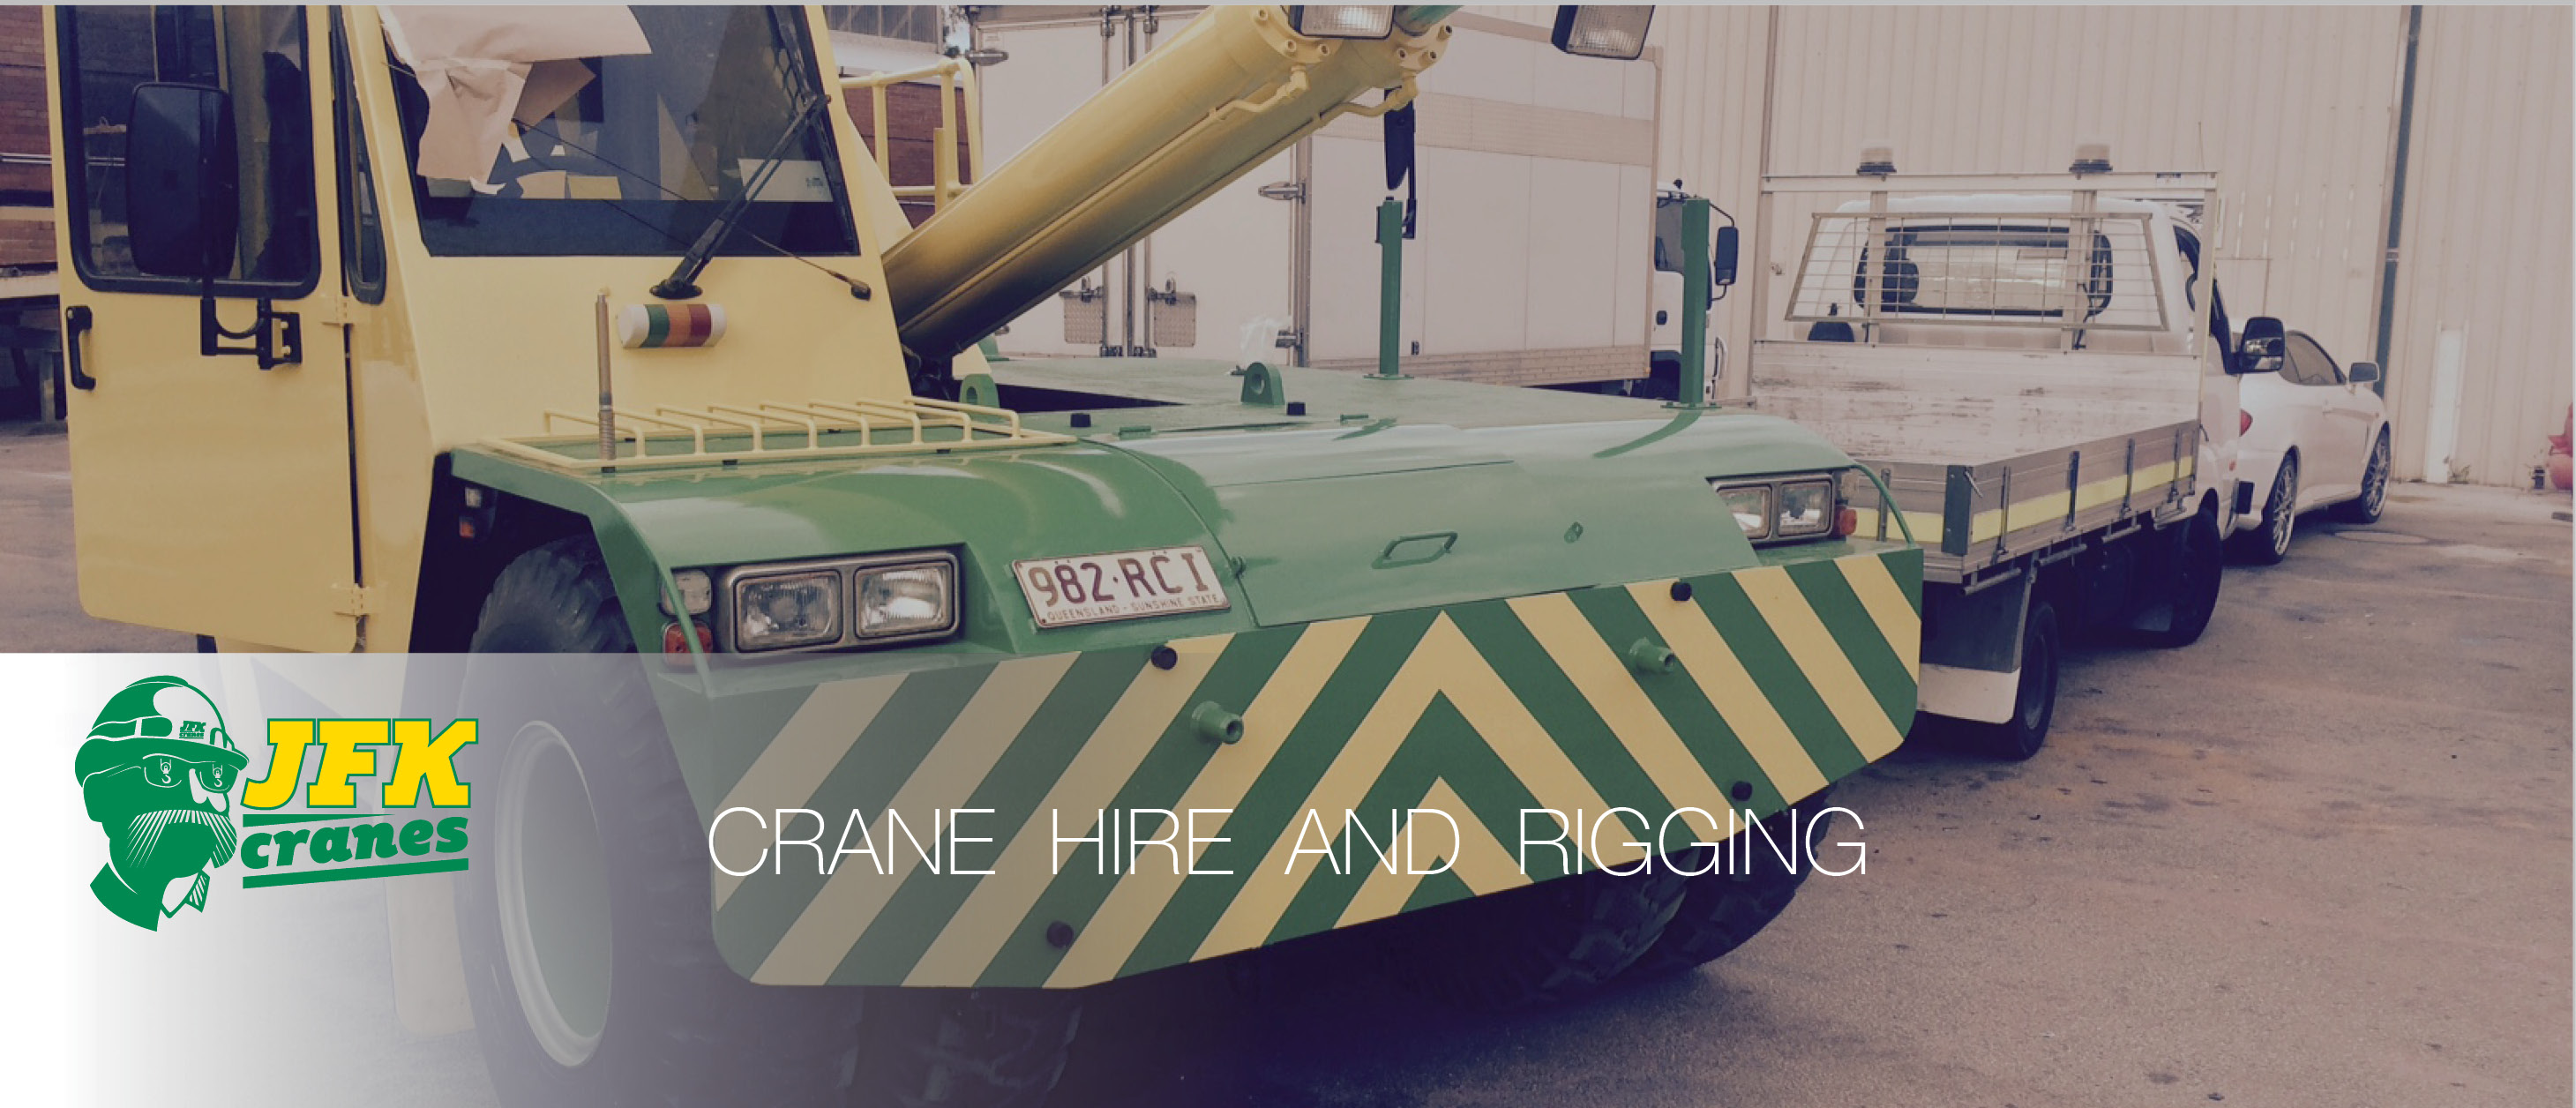 jfk-cranes-crane-hire-rigging-melbourne-25t-franna-slider-d